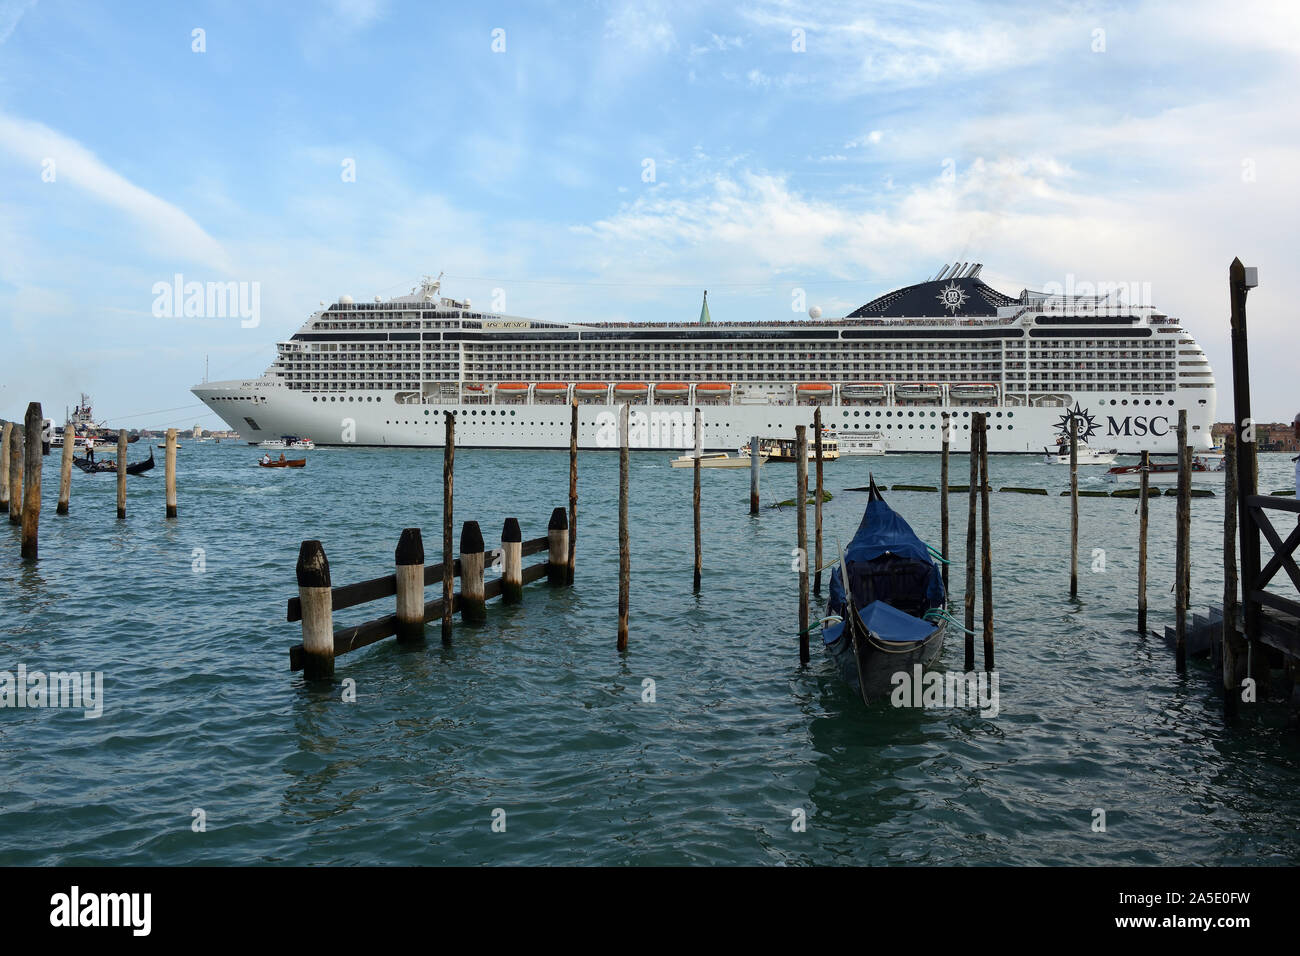 Cruise ship in the Lagoon of Venice - Italy. Stock Photo